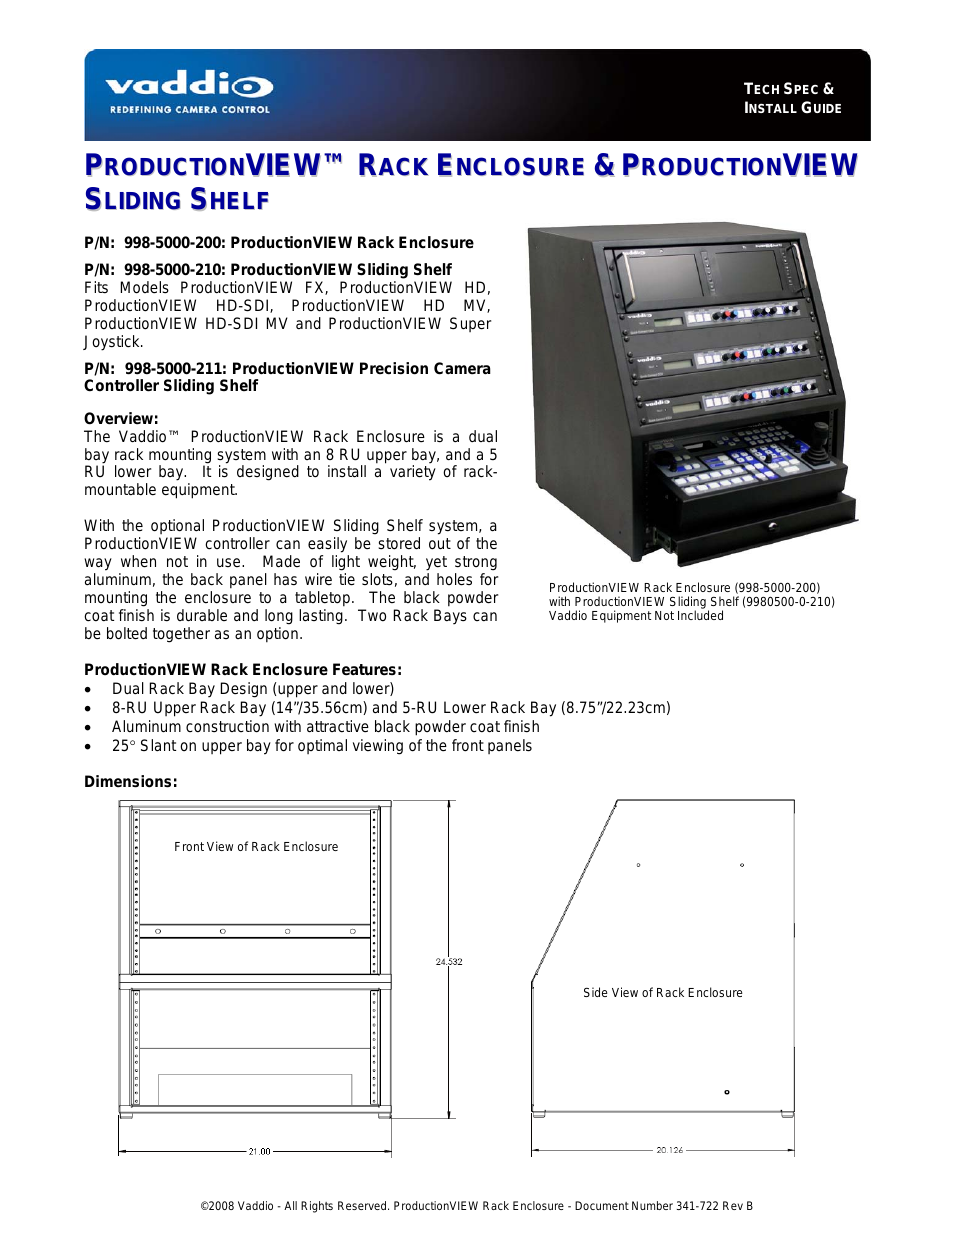 ProductionVIEW Rack Enclosure